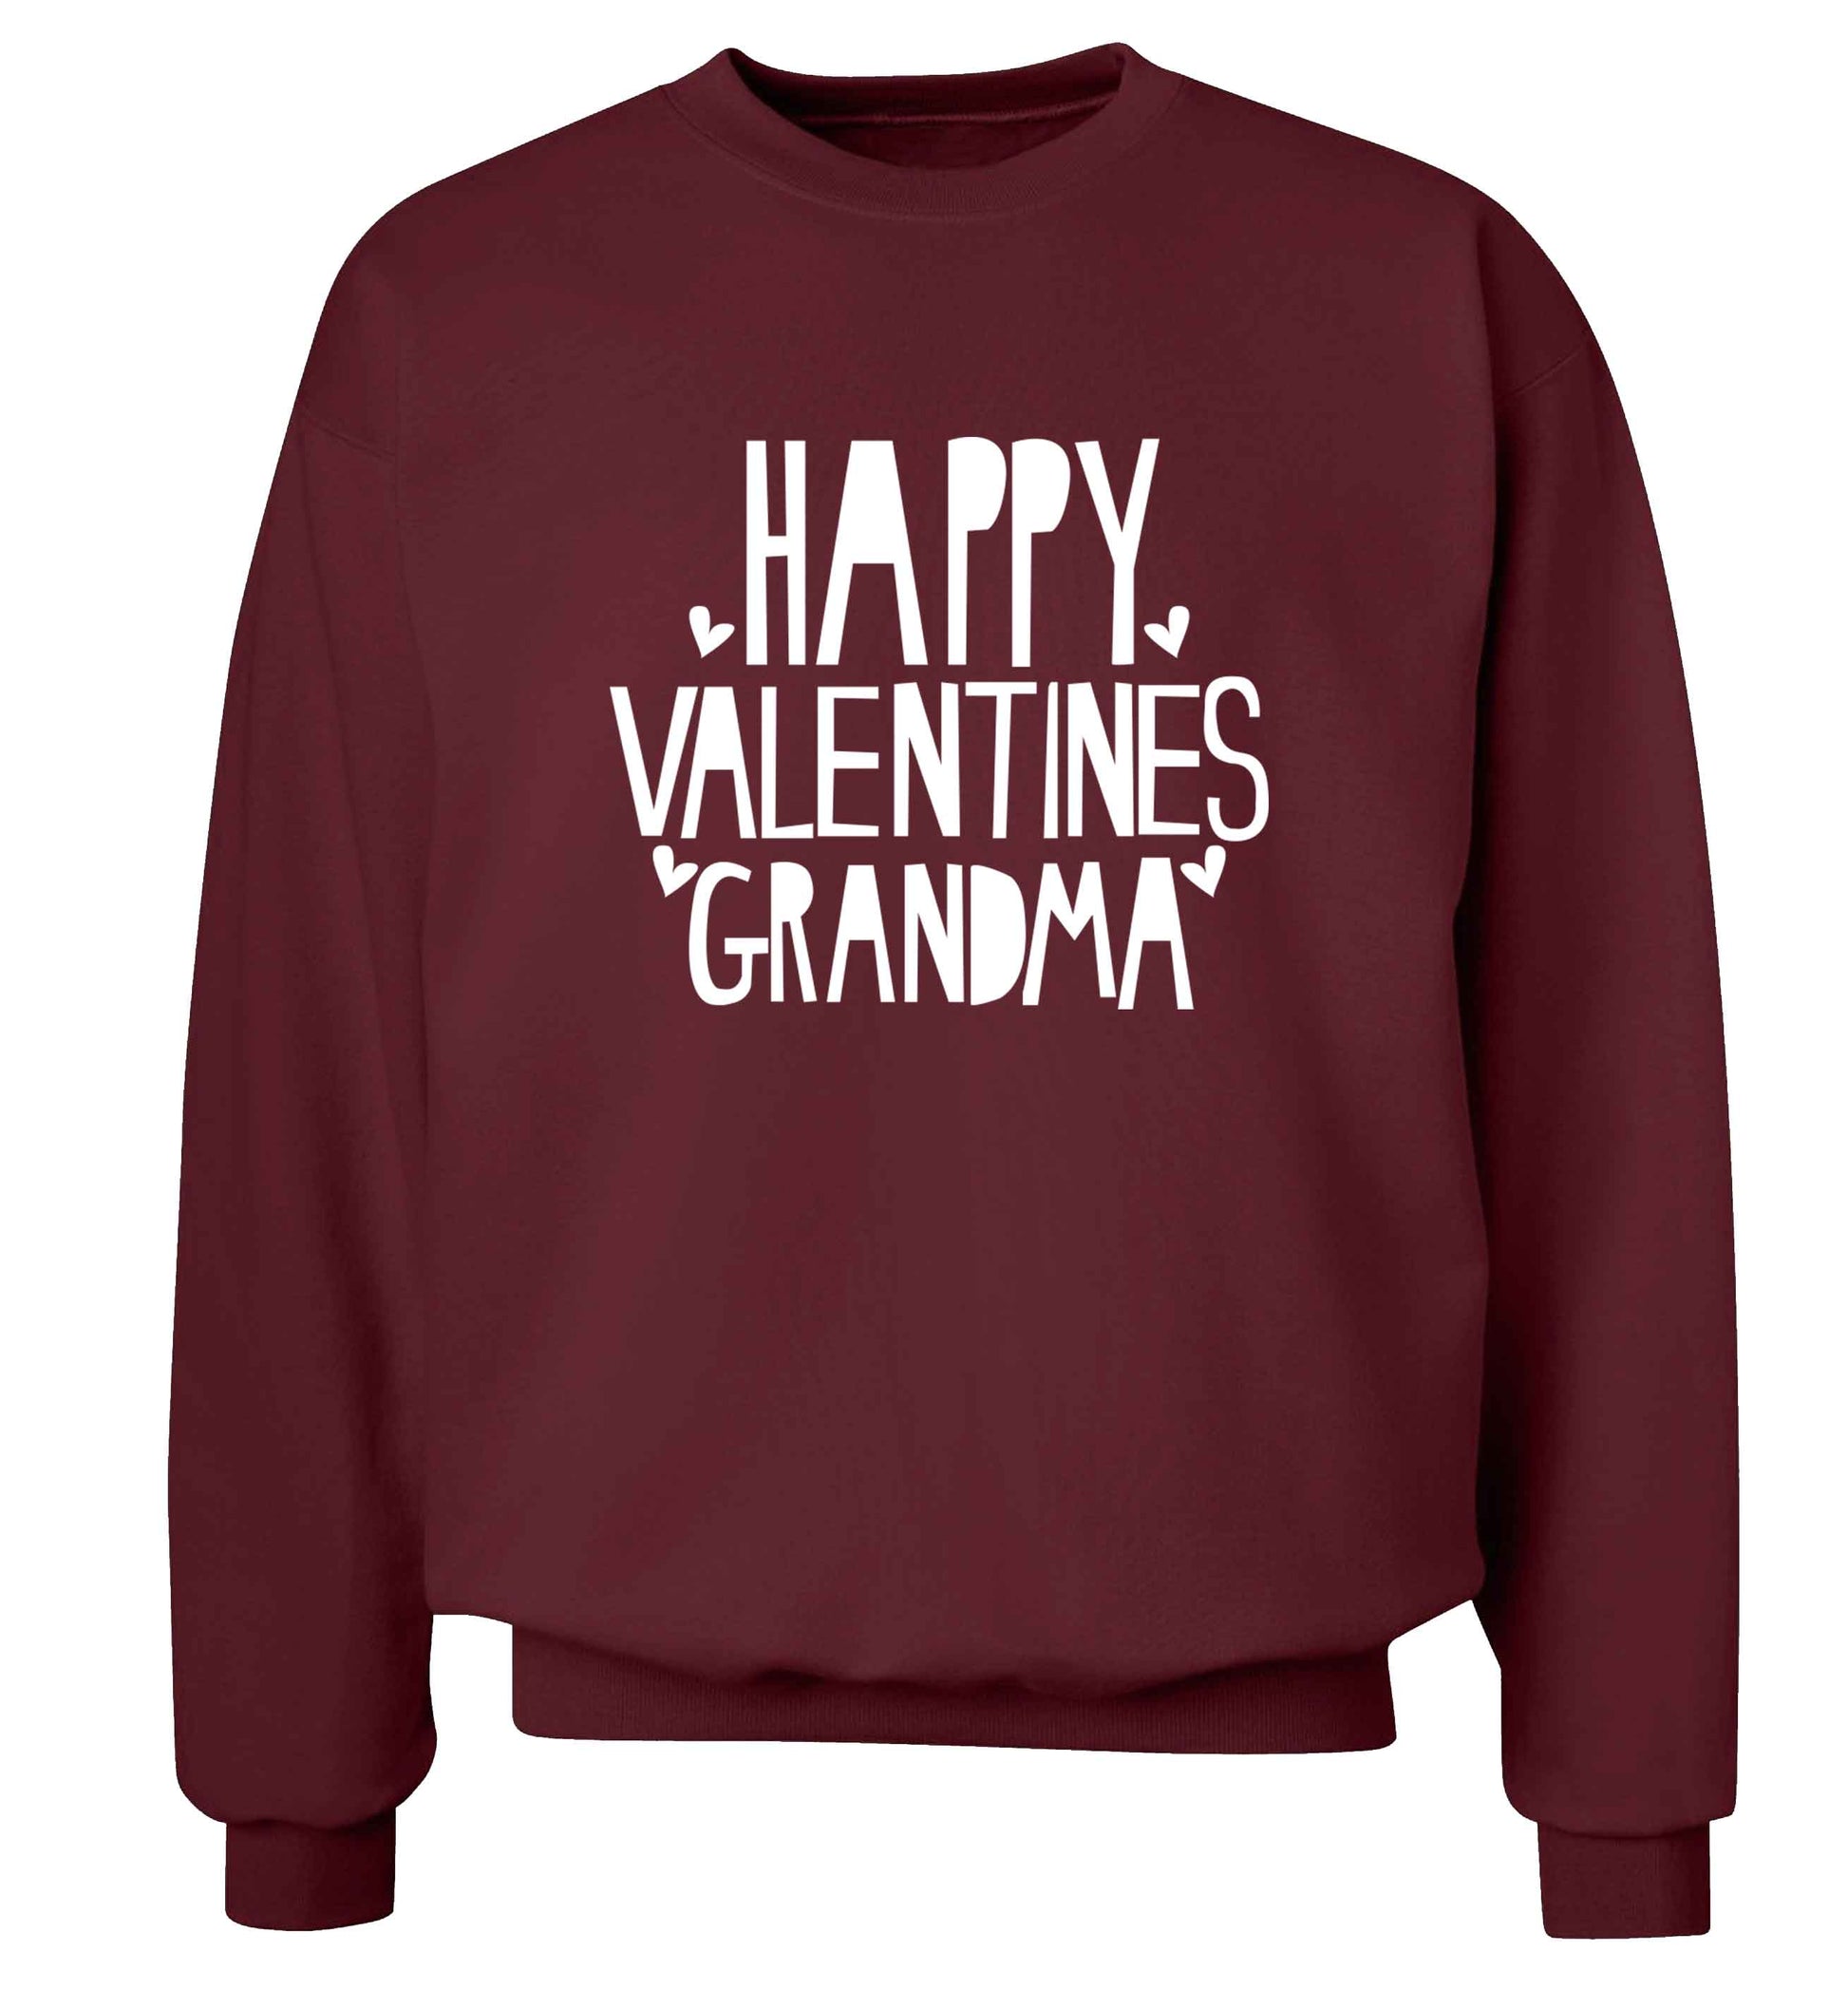 Happy valentines grandma adult's unisex maroon sweater 2XL